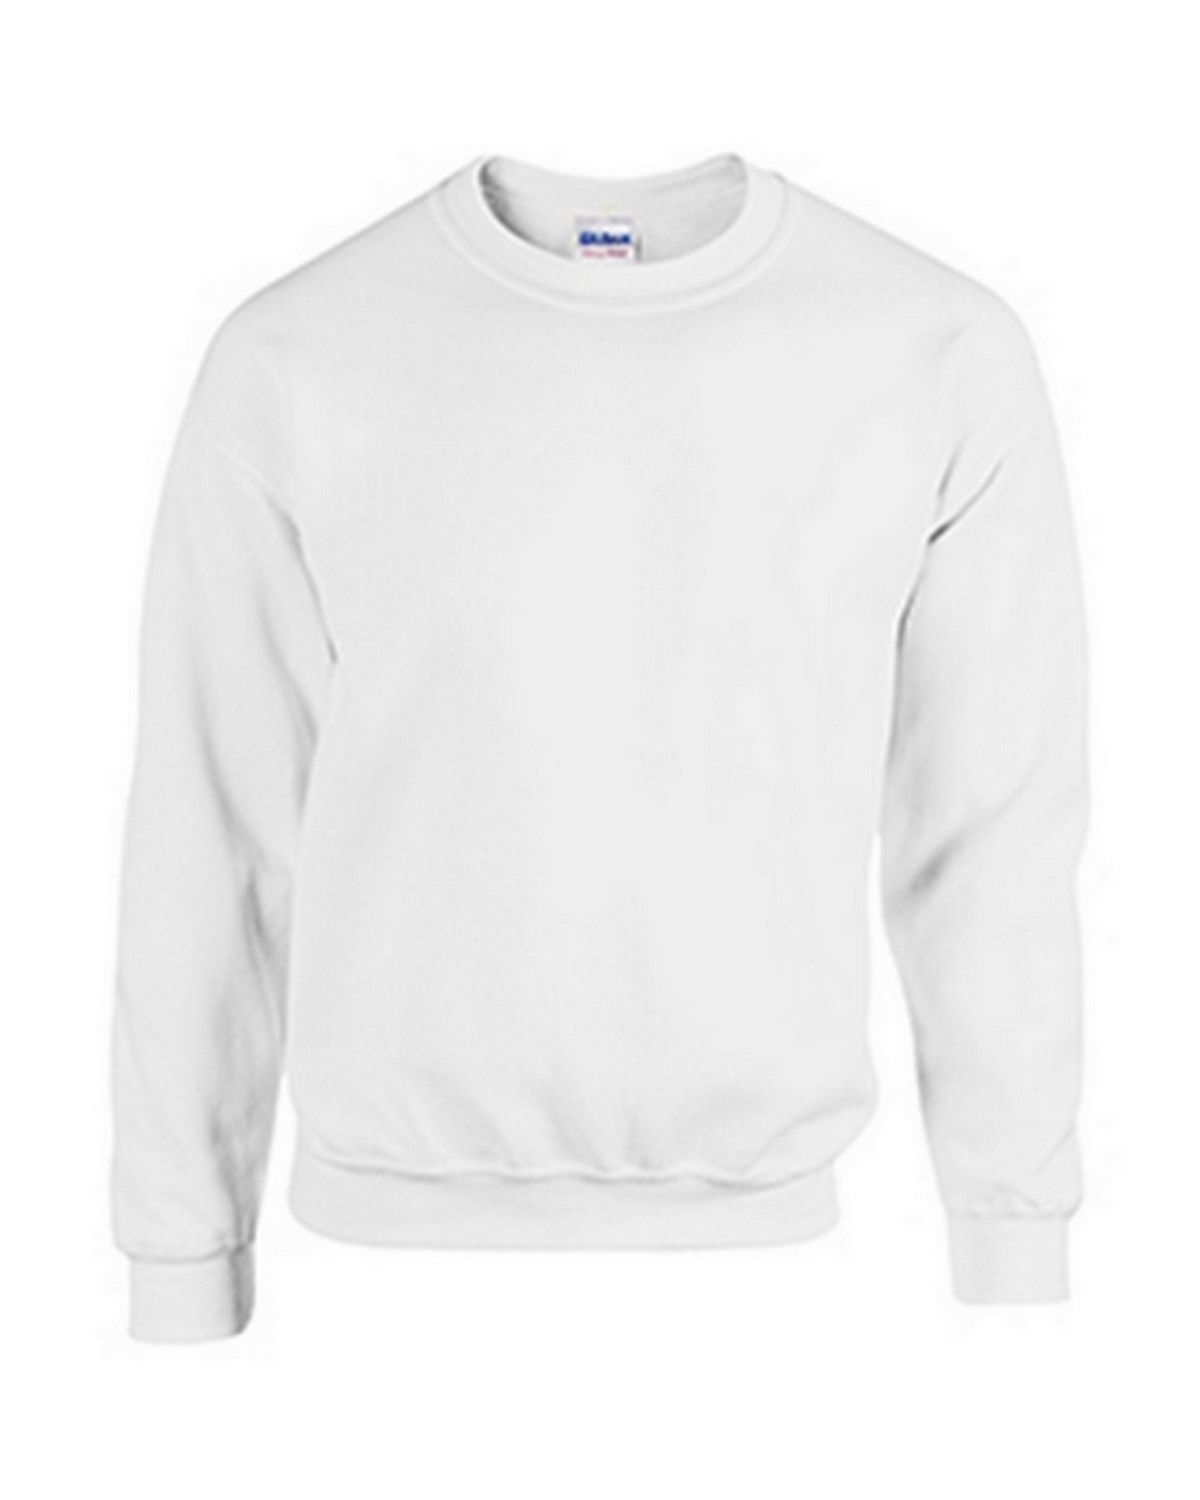 Gildan Heavy Blend Crewneck Sweatshirt Size Chart